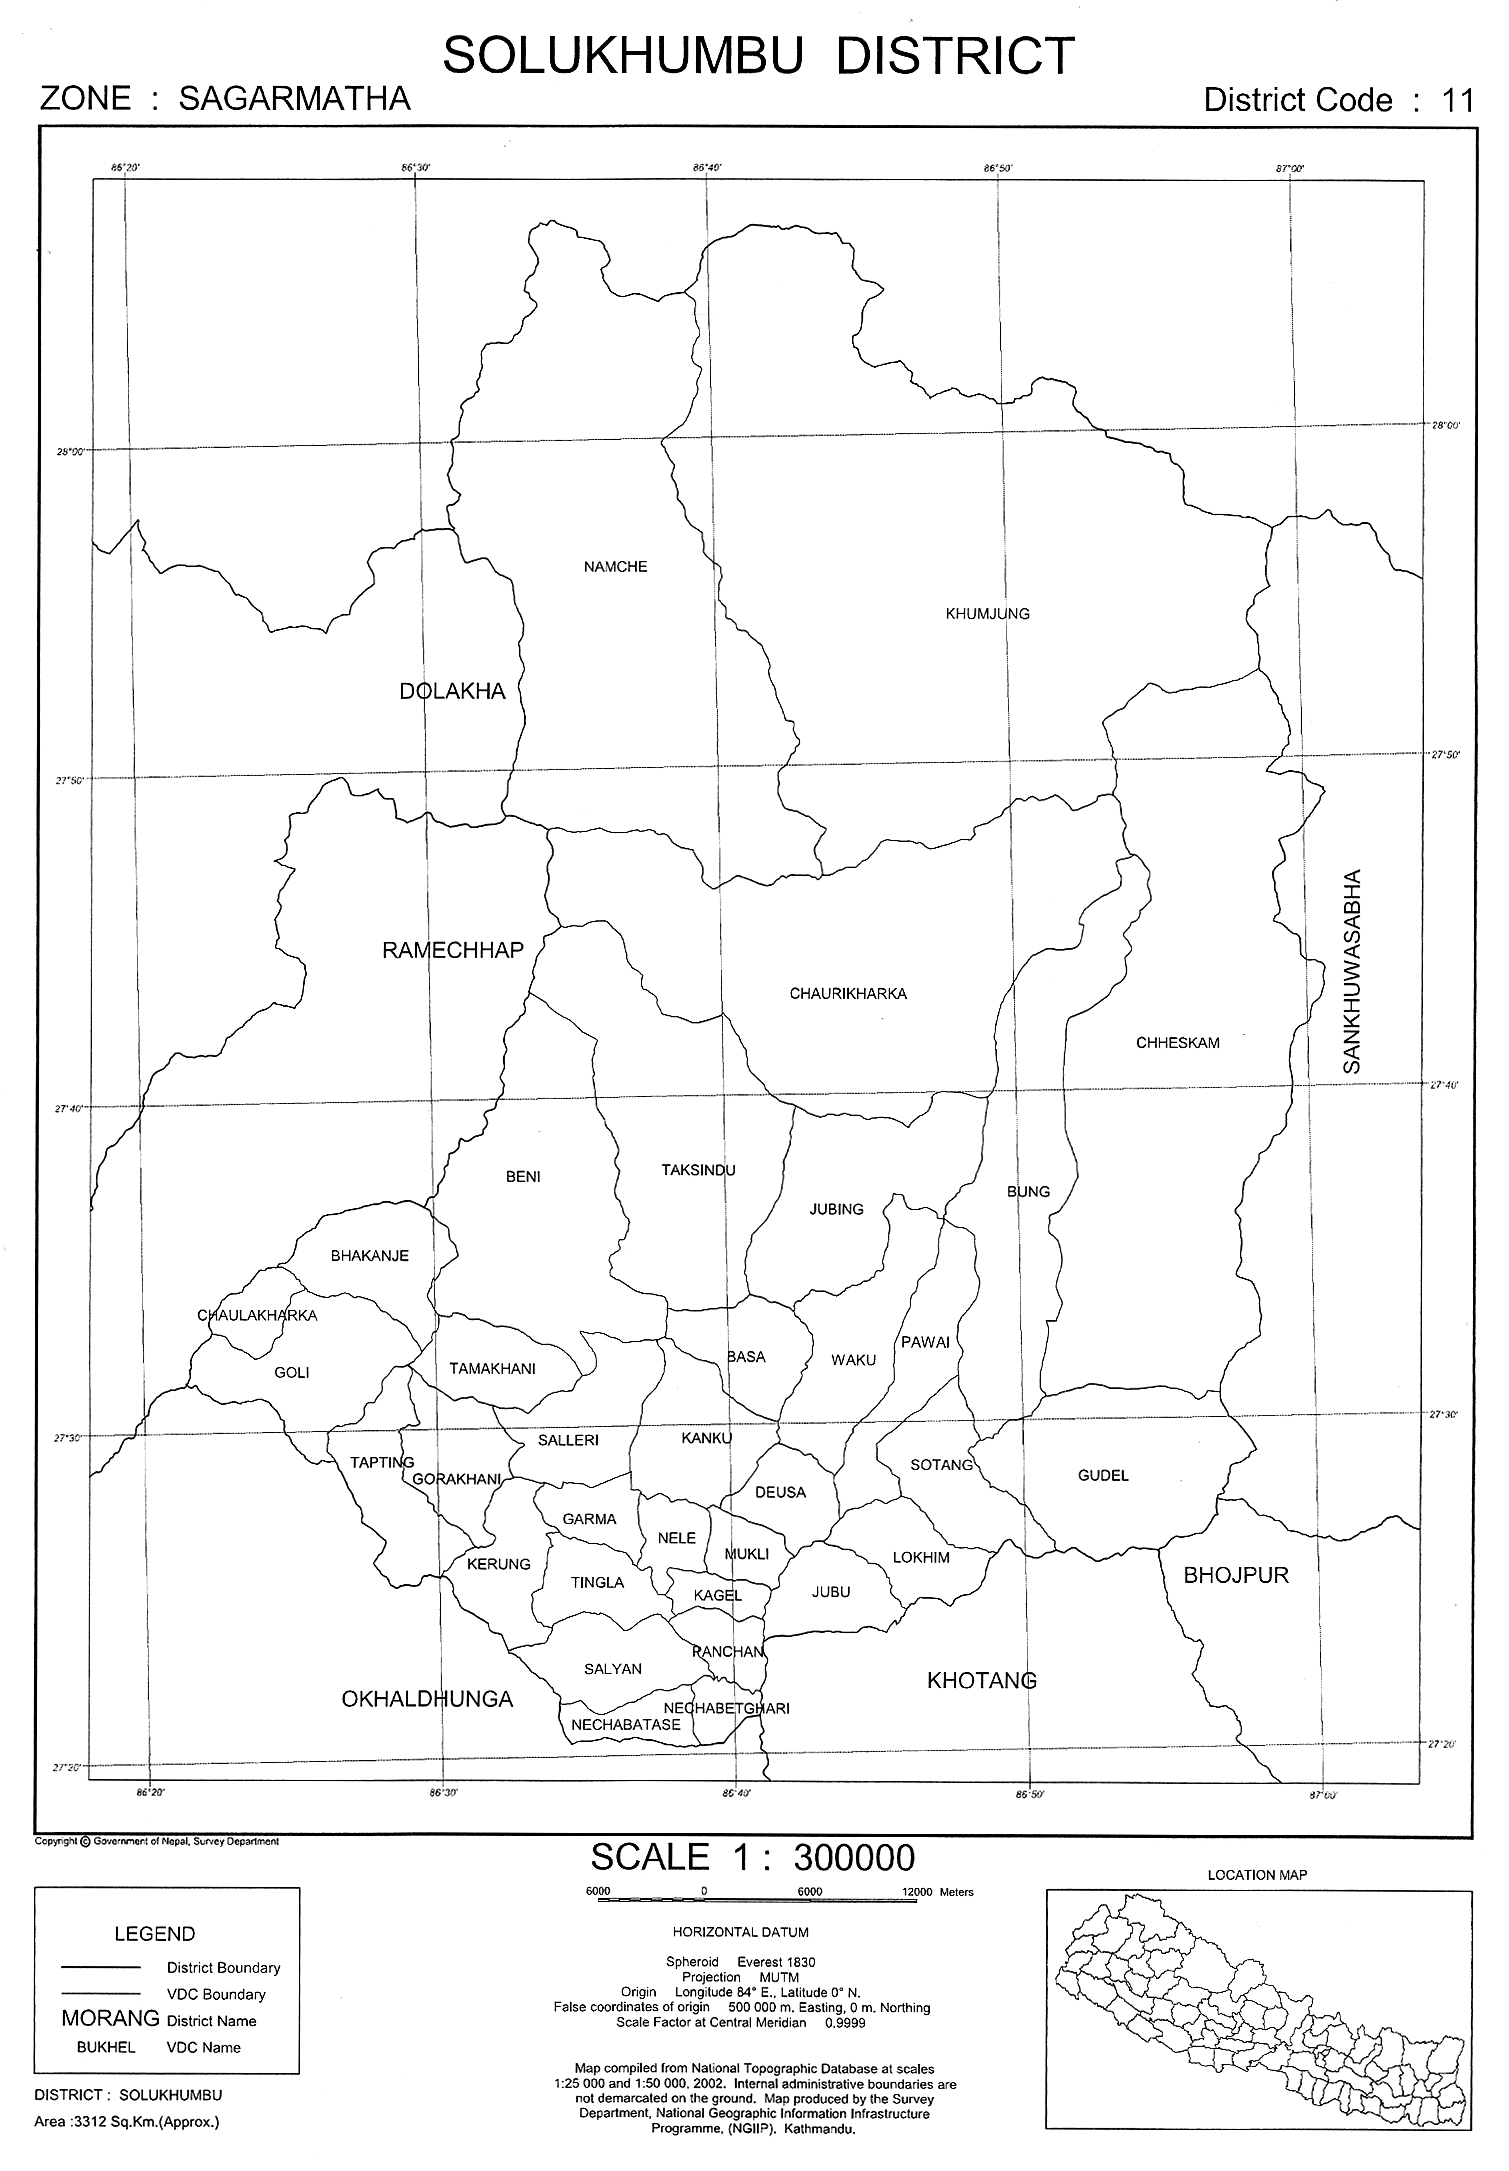 Map of Solukhumbu District of Nepal